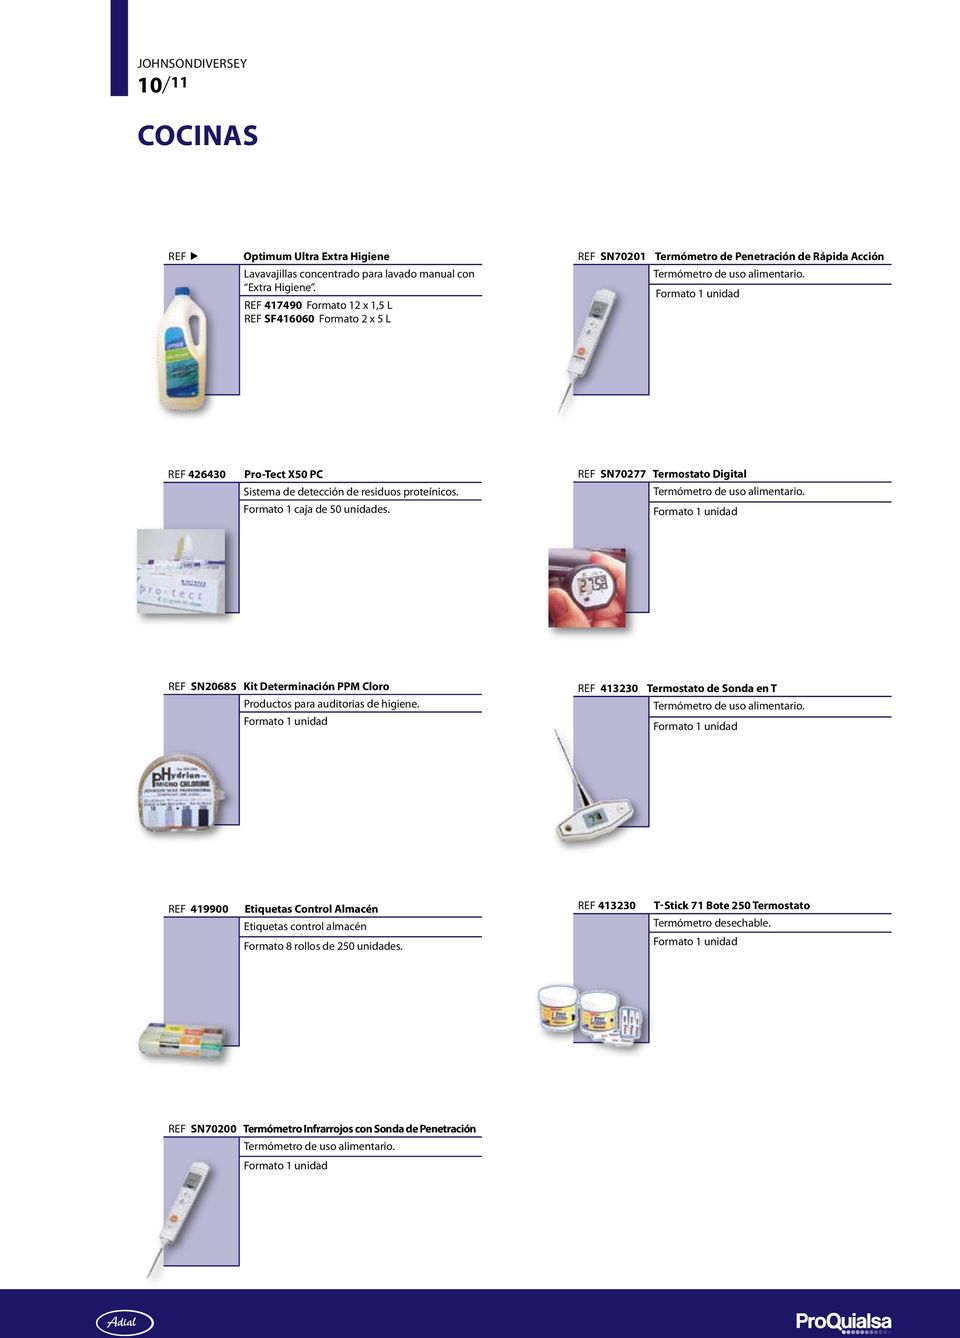 Formato 1 caja de 50 unidades. SN70277 Termostato Digital Termómetro de uso alimentario. SN20685 Kit Determinación PPM Cloro Productos para auditorias de higiene.